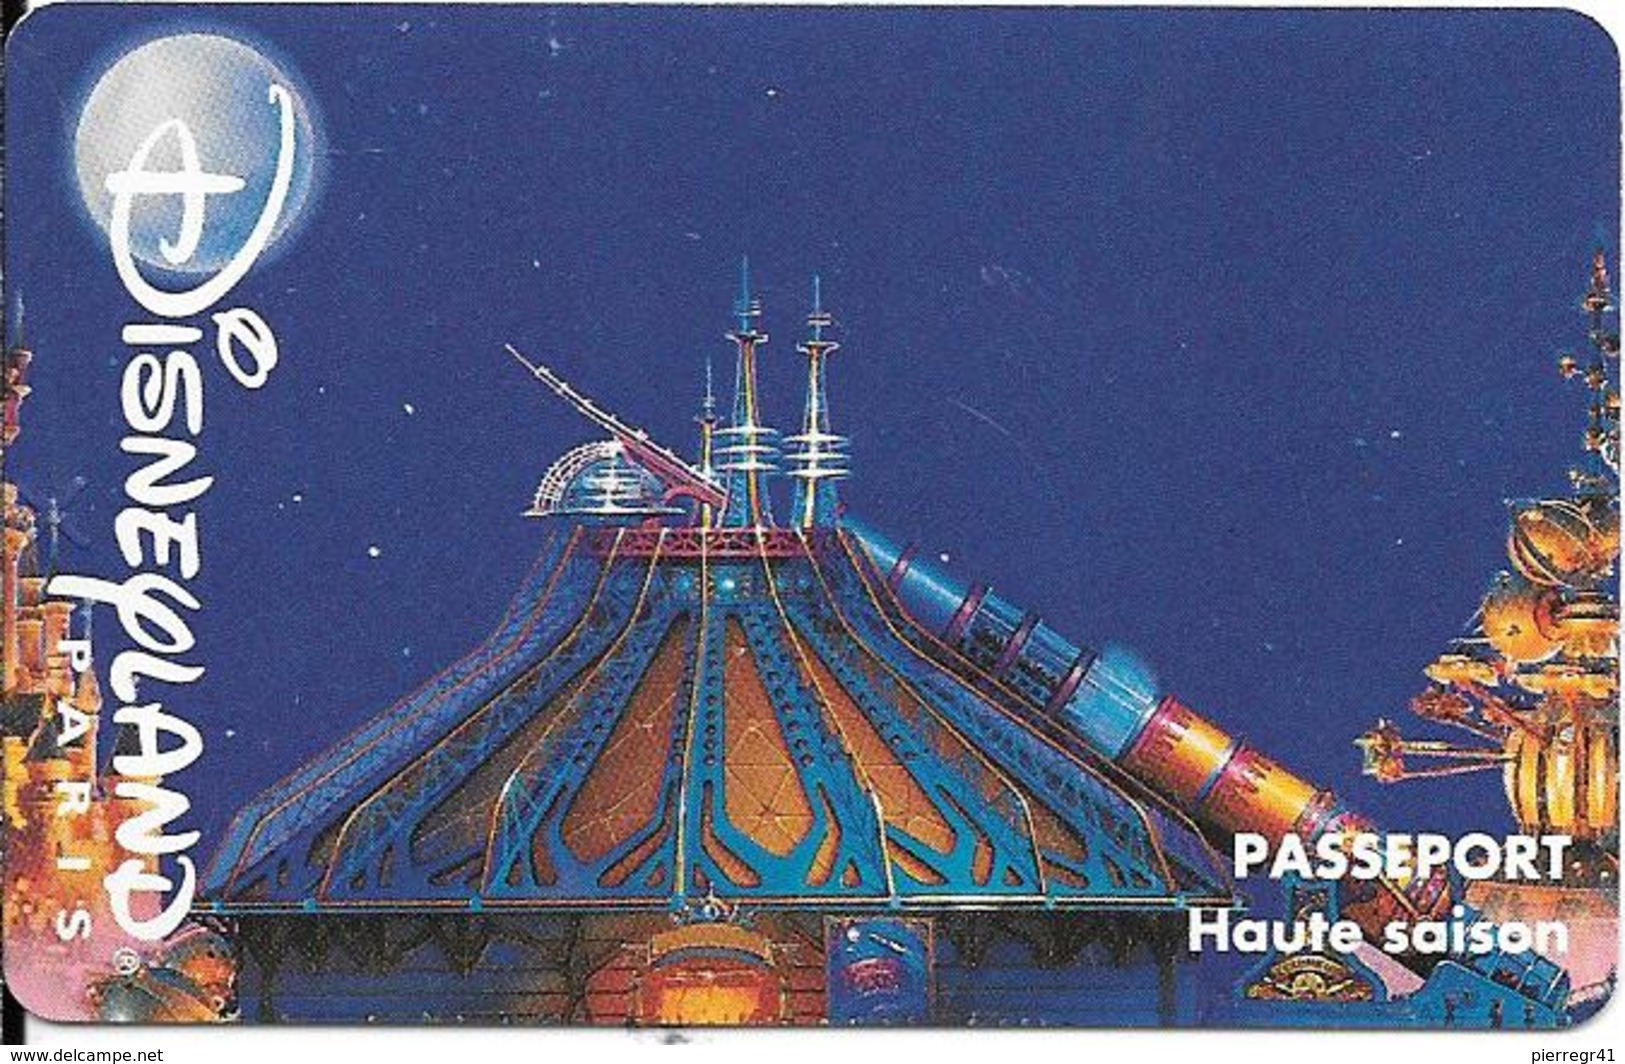 PASS-DISNEYLANDPARIS -1996-SPACE MOUNTAIN-ADULTE-V° N° S 049610- Horizontal En HAUT-MKC-VALIDE 1 JOUR-TBE- - Passeports Disney